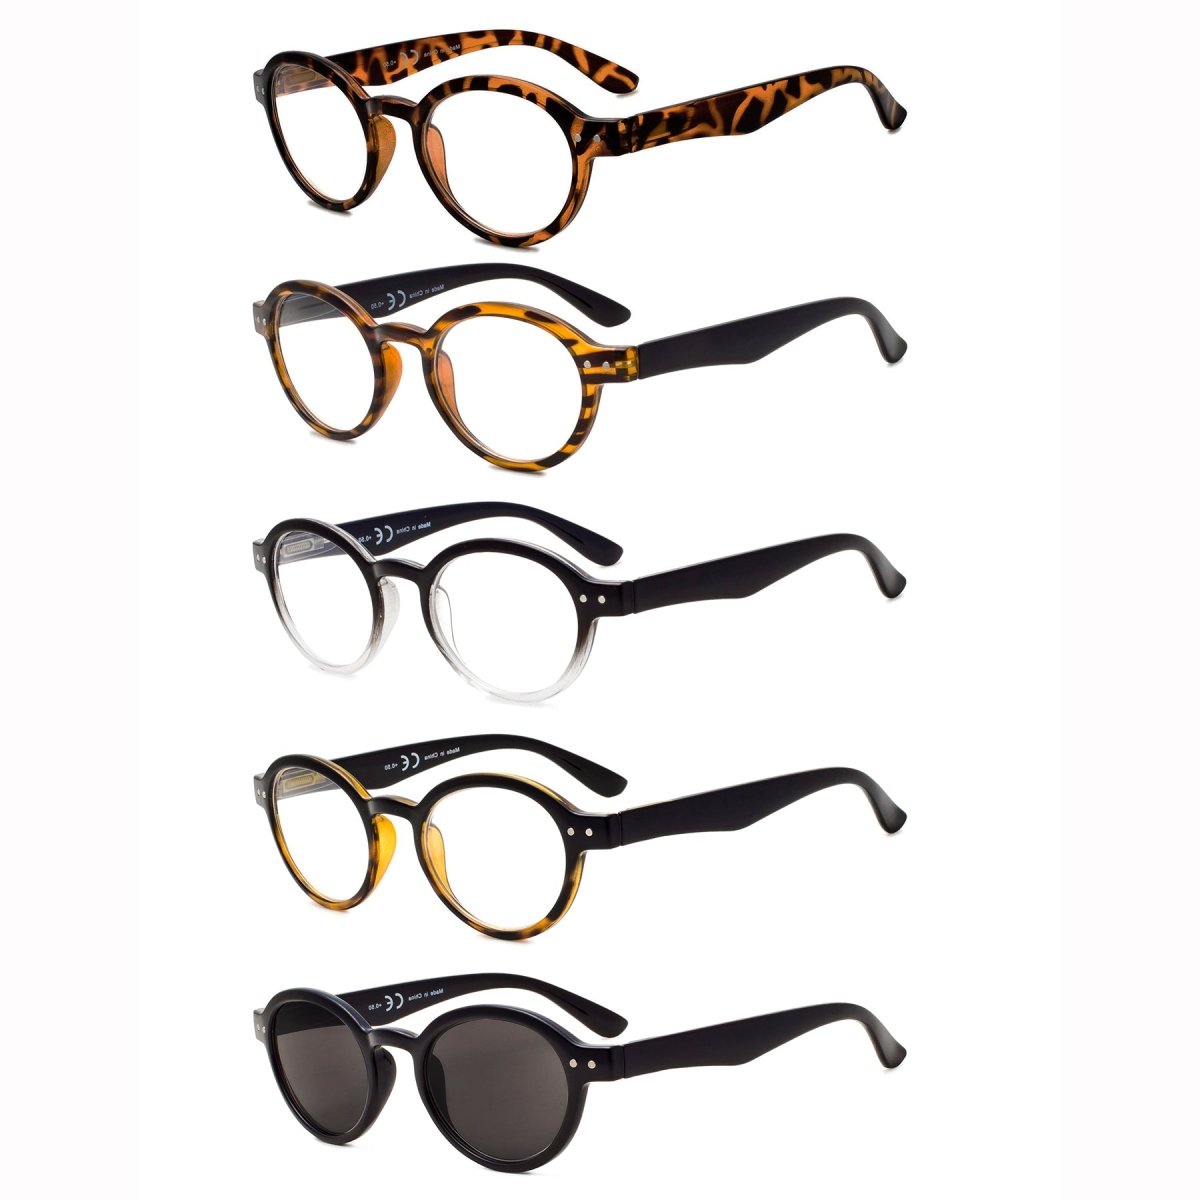 5 Pack Retro Round Reading Glasses Include Sunglasses Men